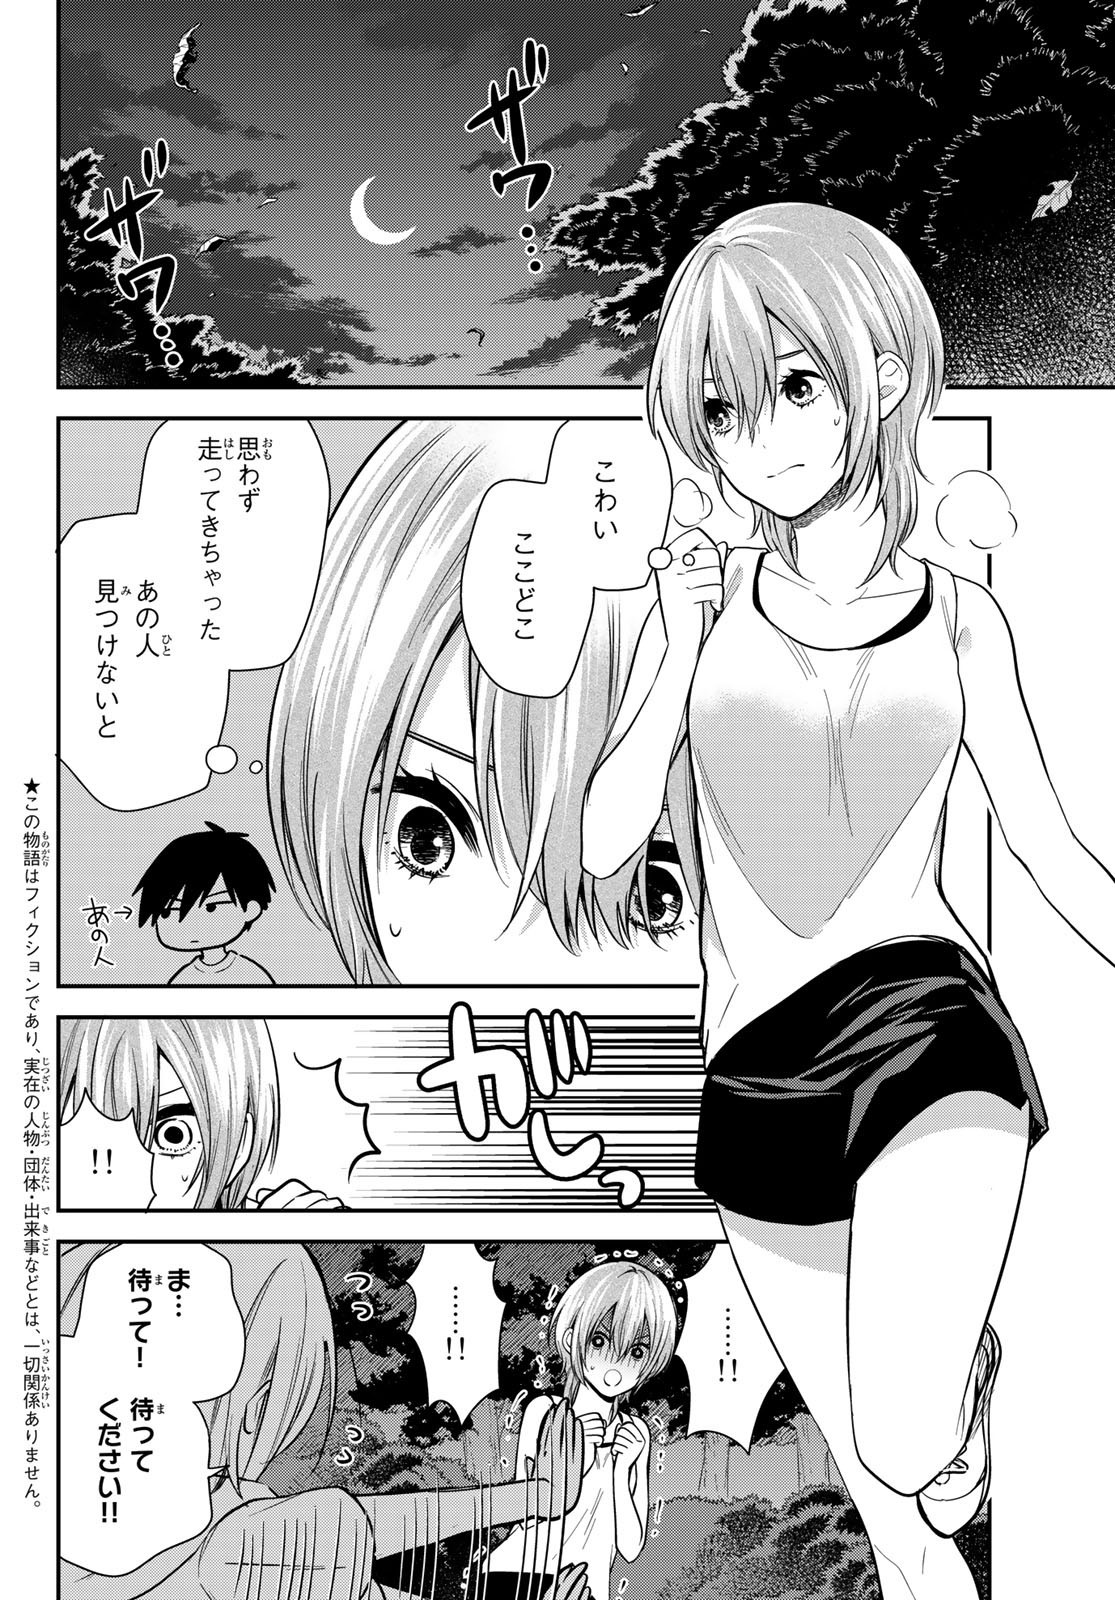 Kimi ga Megami Nara Ii no ni (I Wish You Were My Muse) - Chapter 022 - Page 2